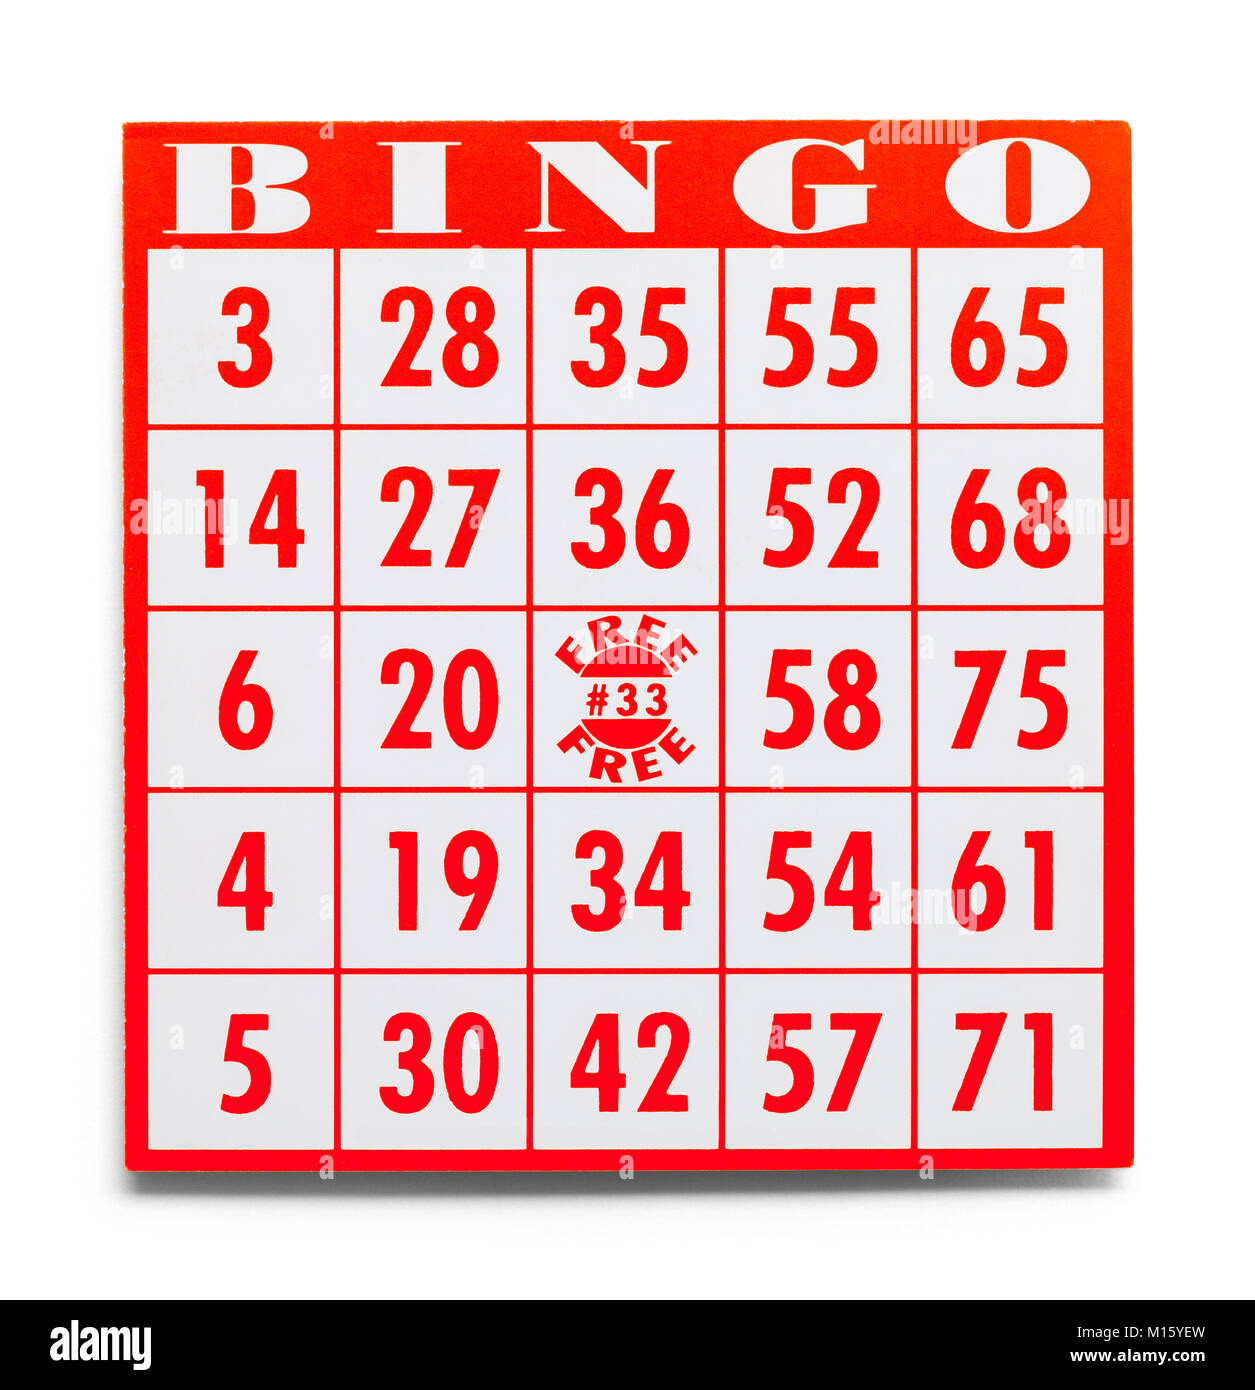 red bingo